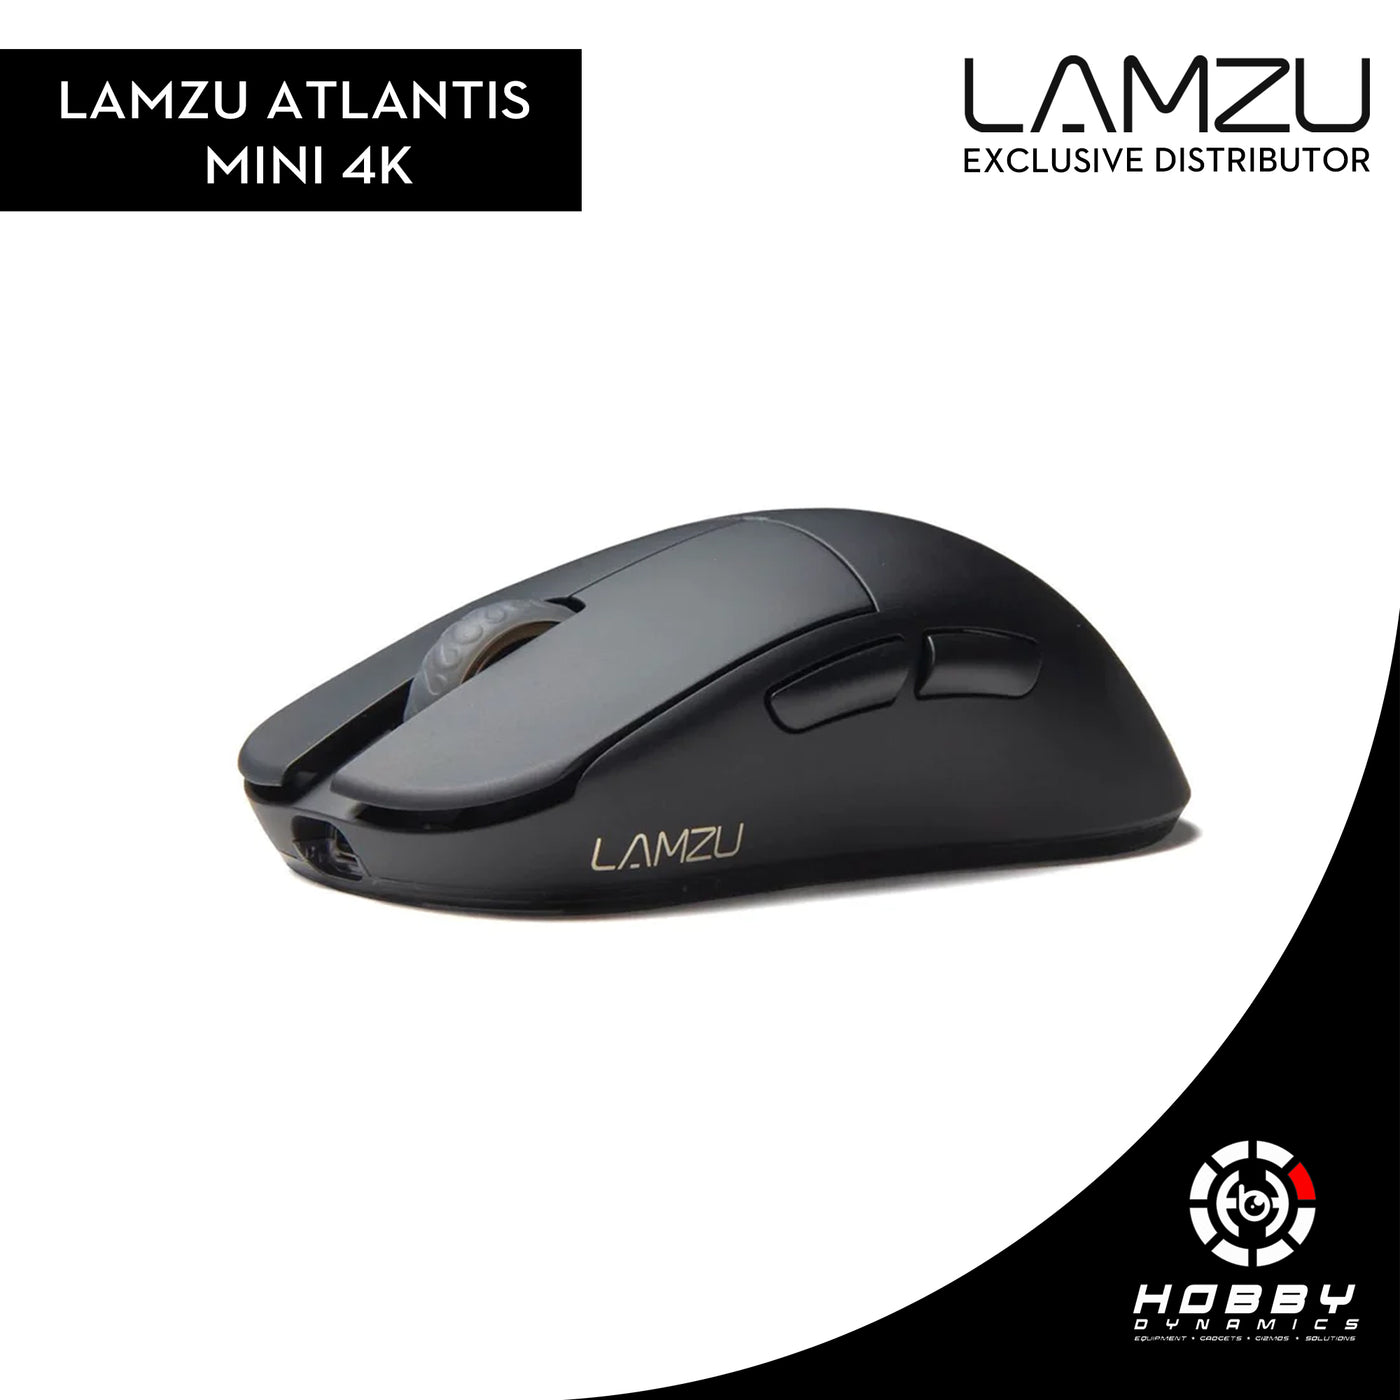 Lamzu Atlantis Mini 4K Wireless Superlight